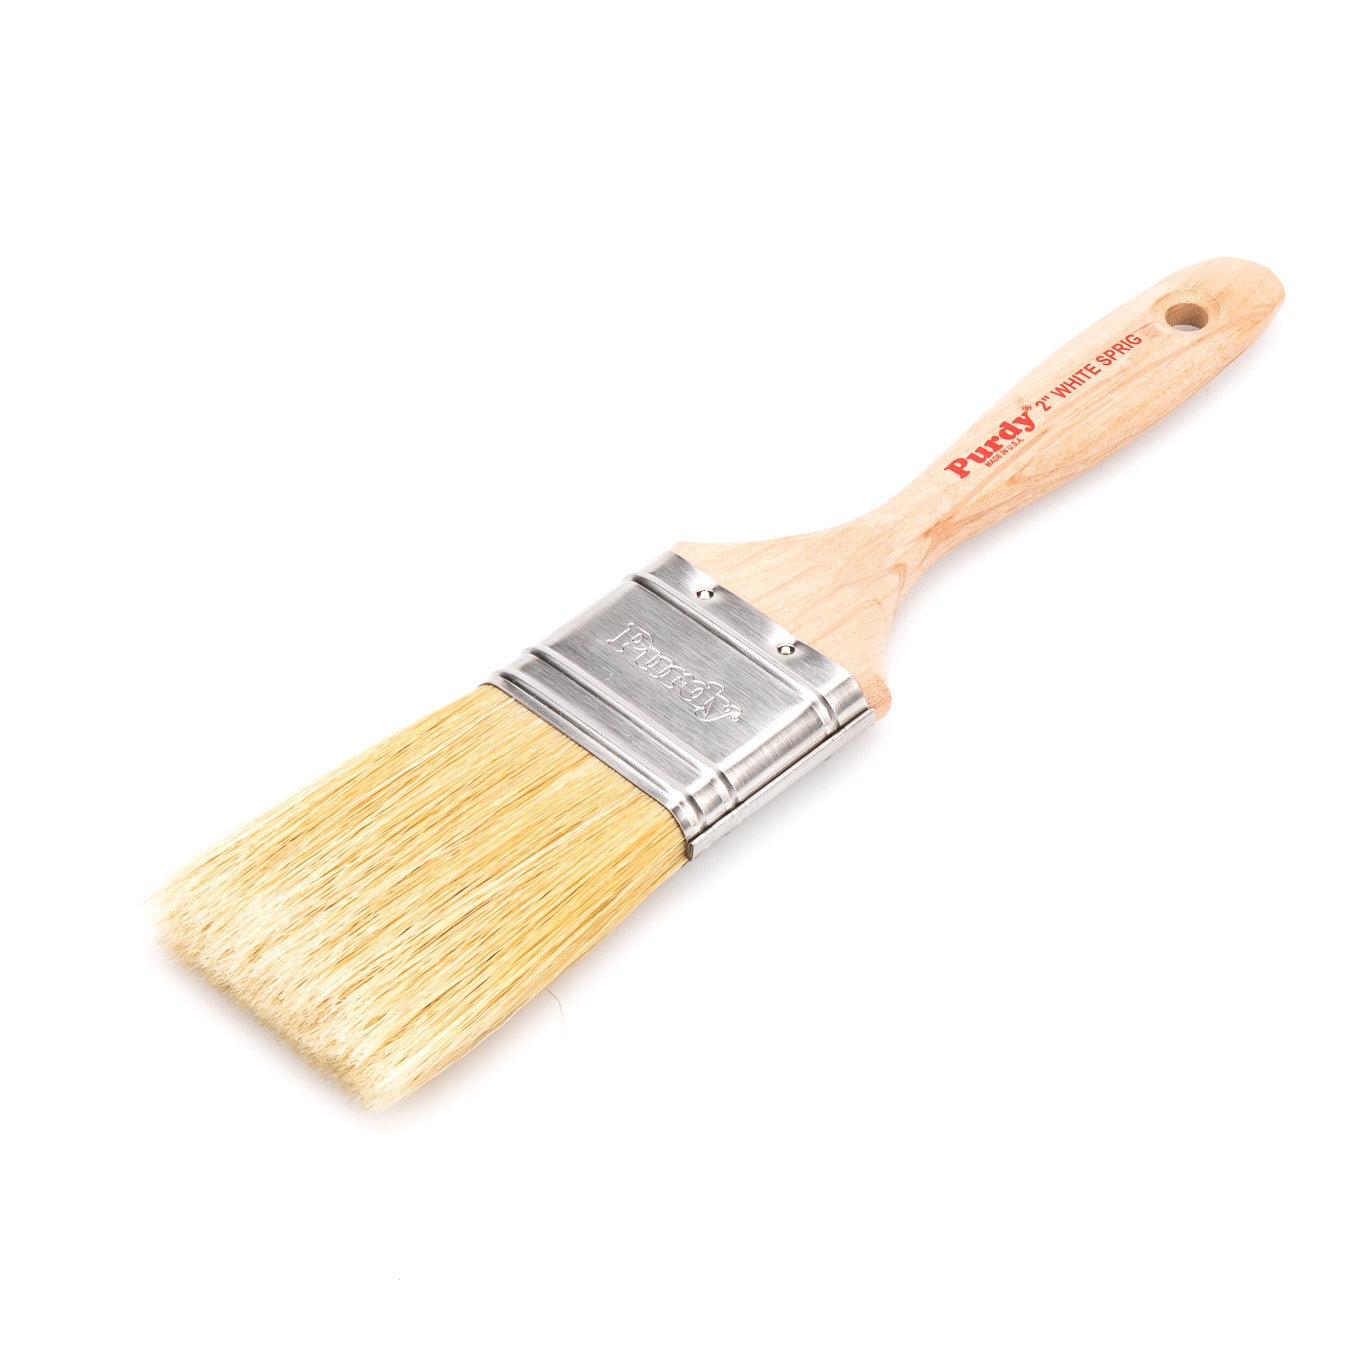 2 Pro Solutions 23120 White China Bristle Paint Brush, BeaverTail Handle